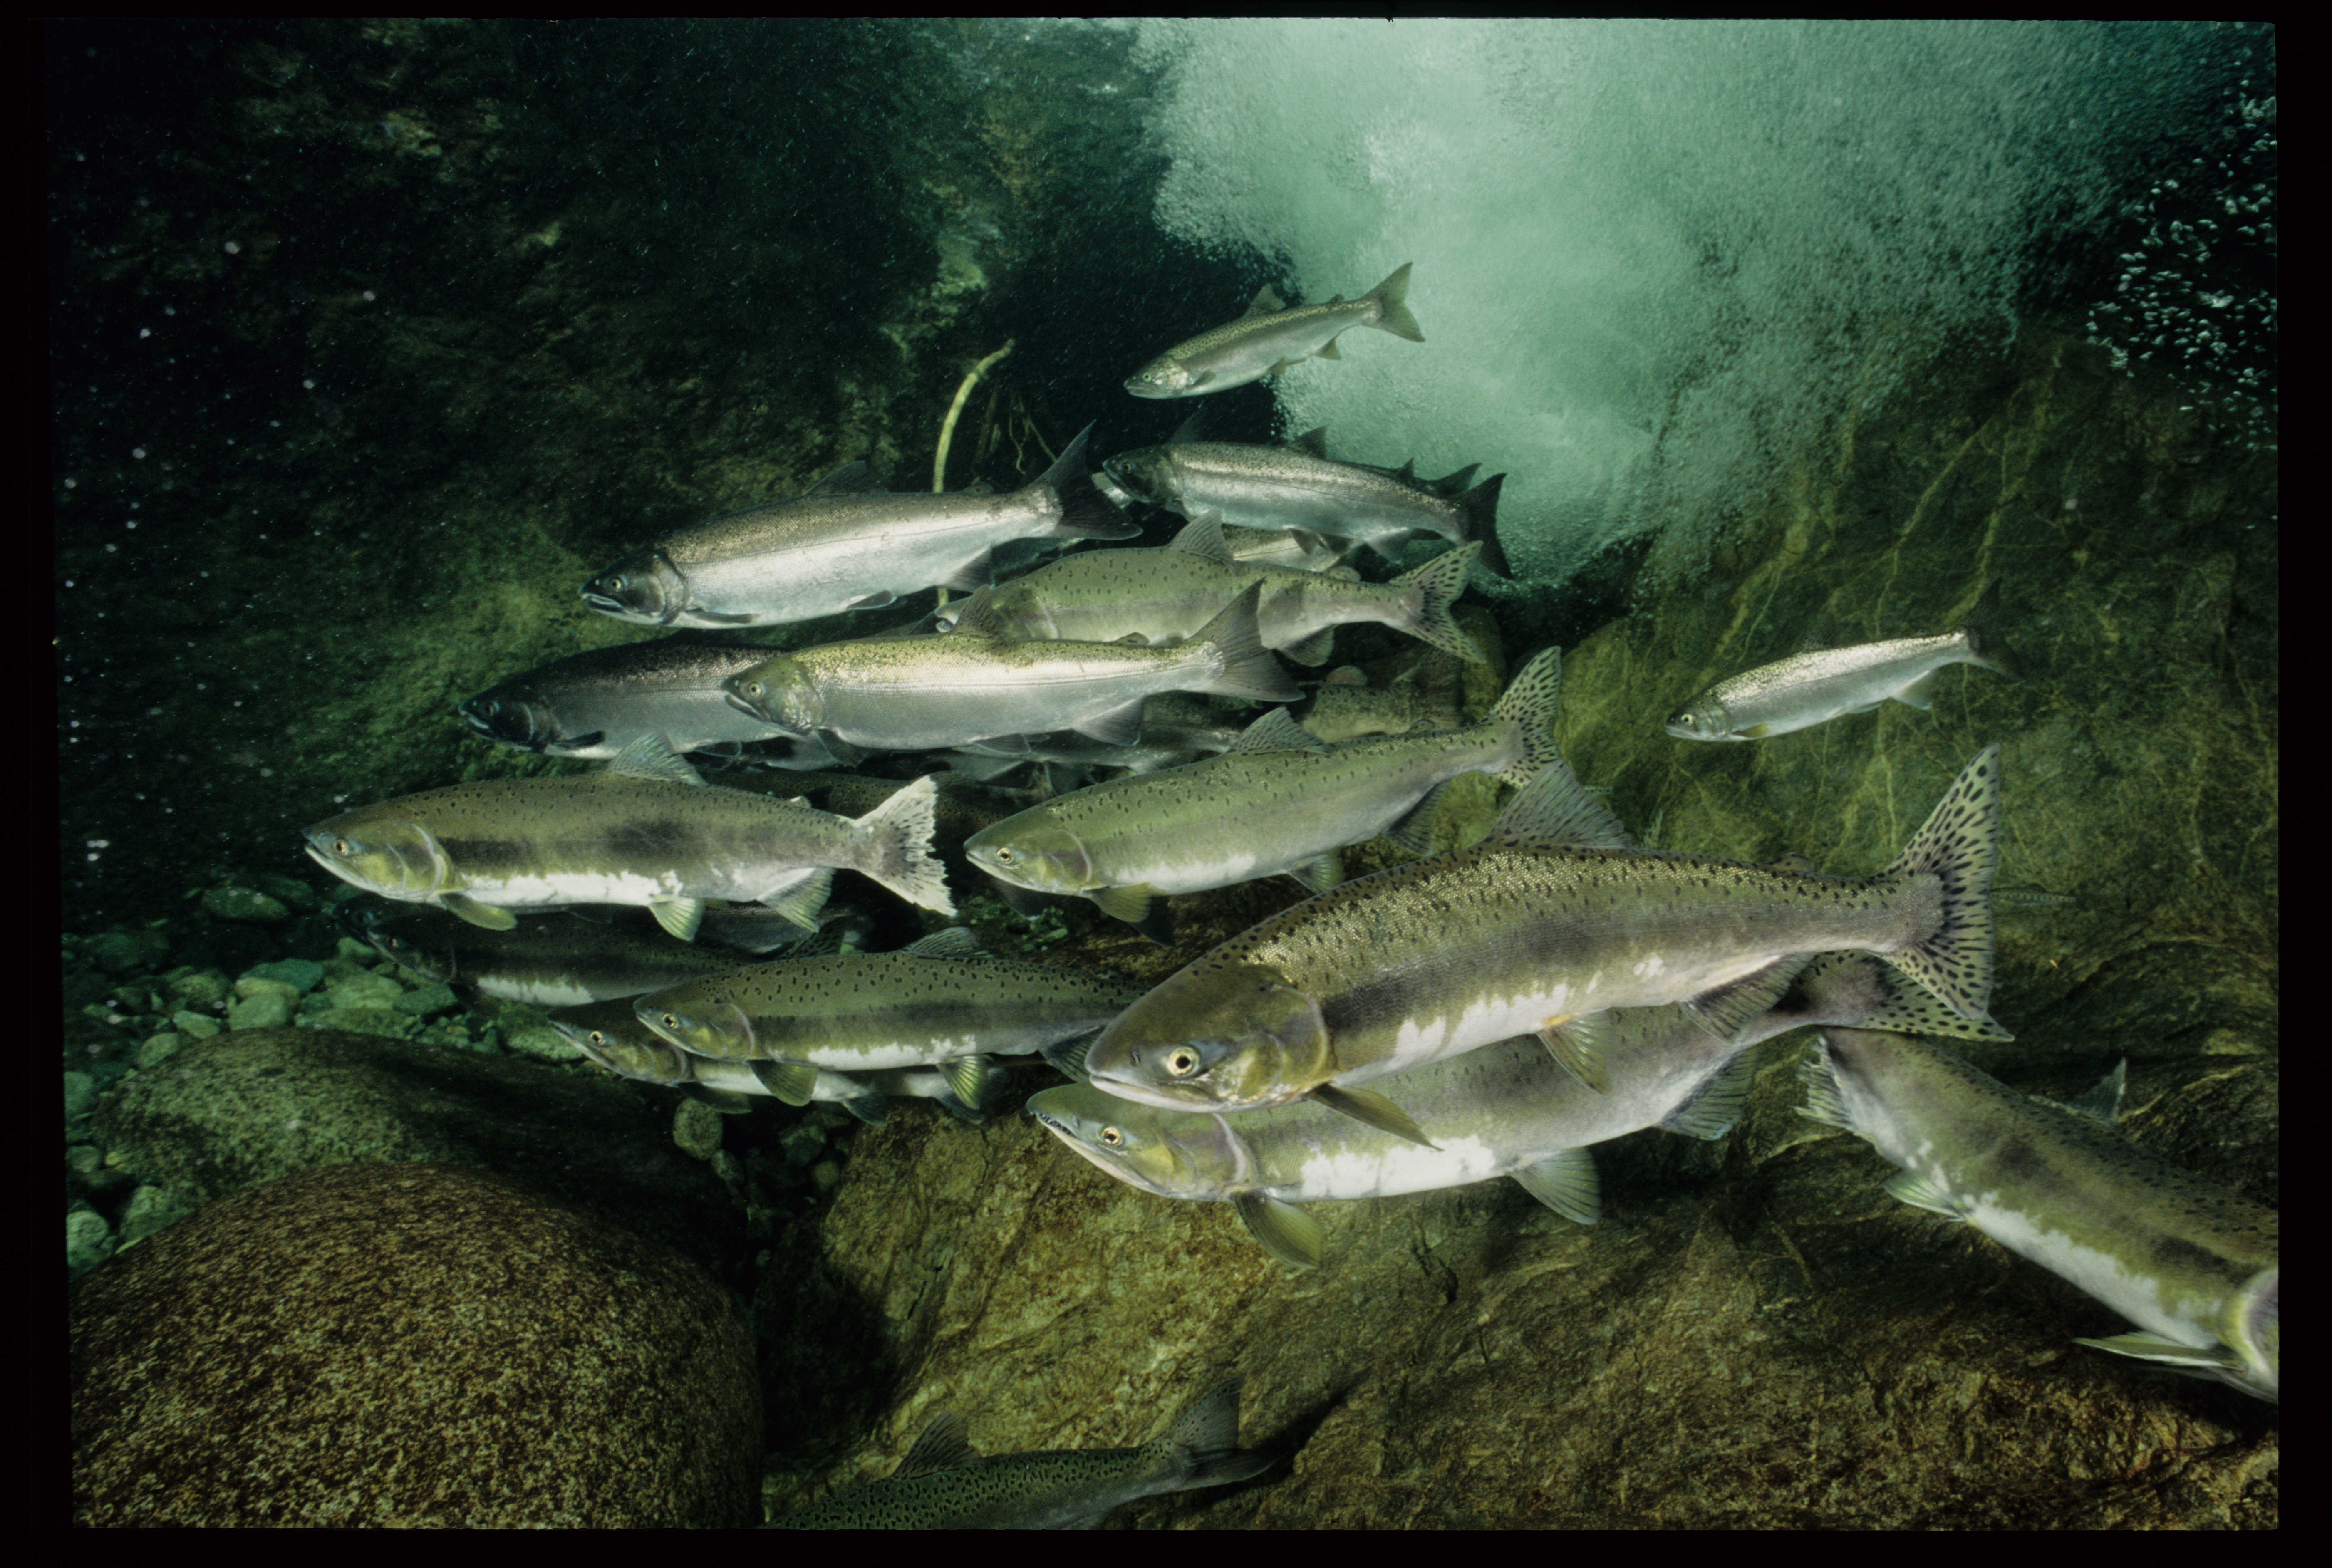 A school of salmon underwater. End of image description.